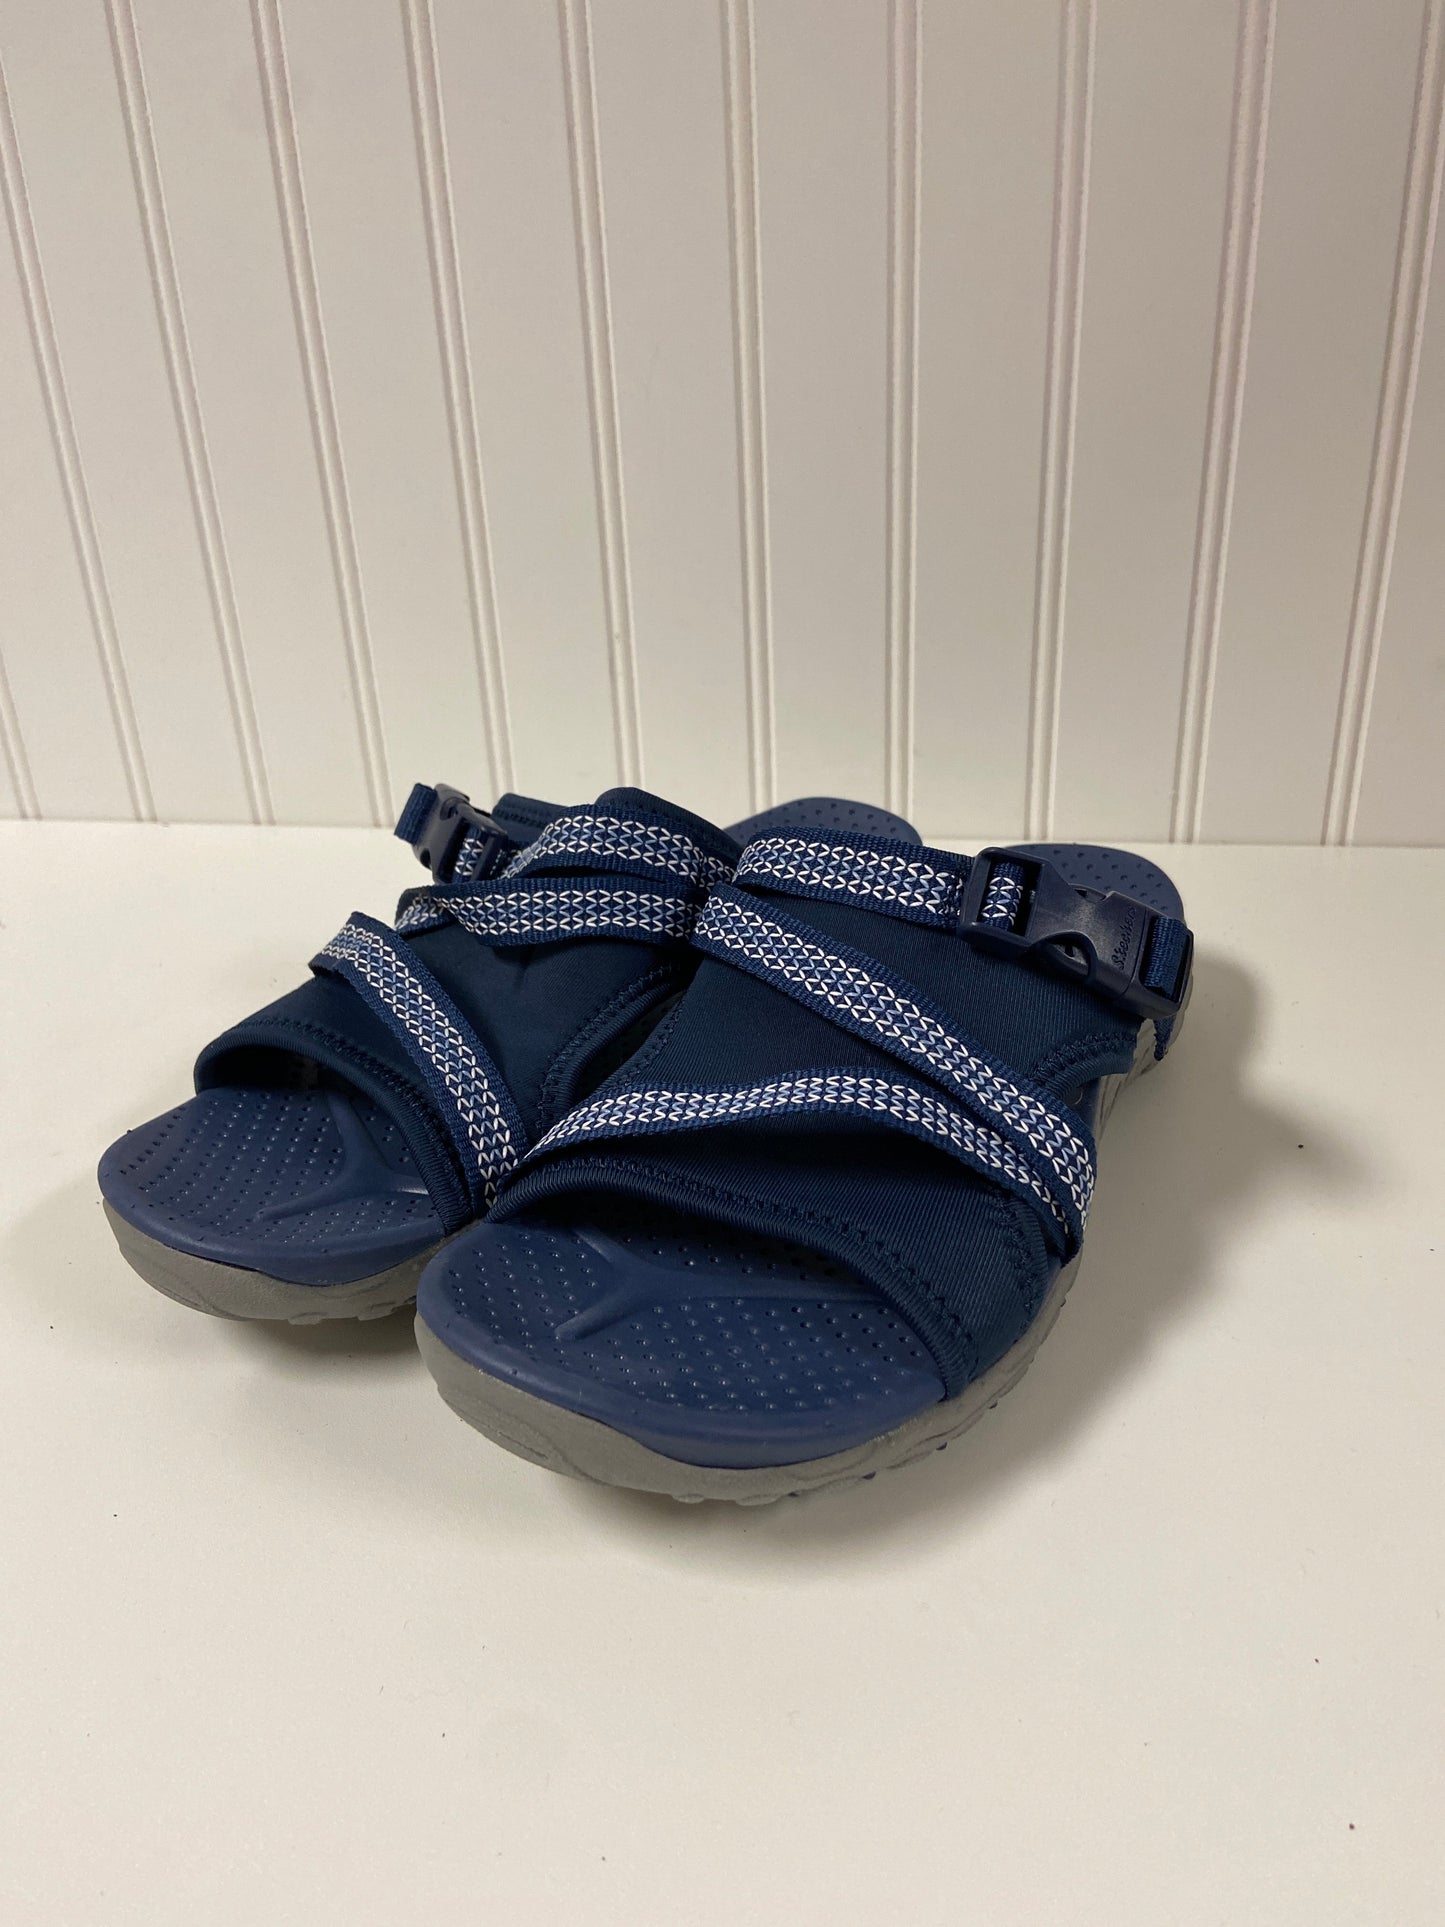 Navy Sandals Flats Skechers, Size 8